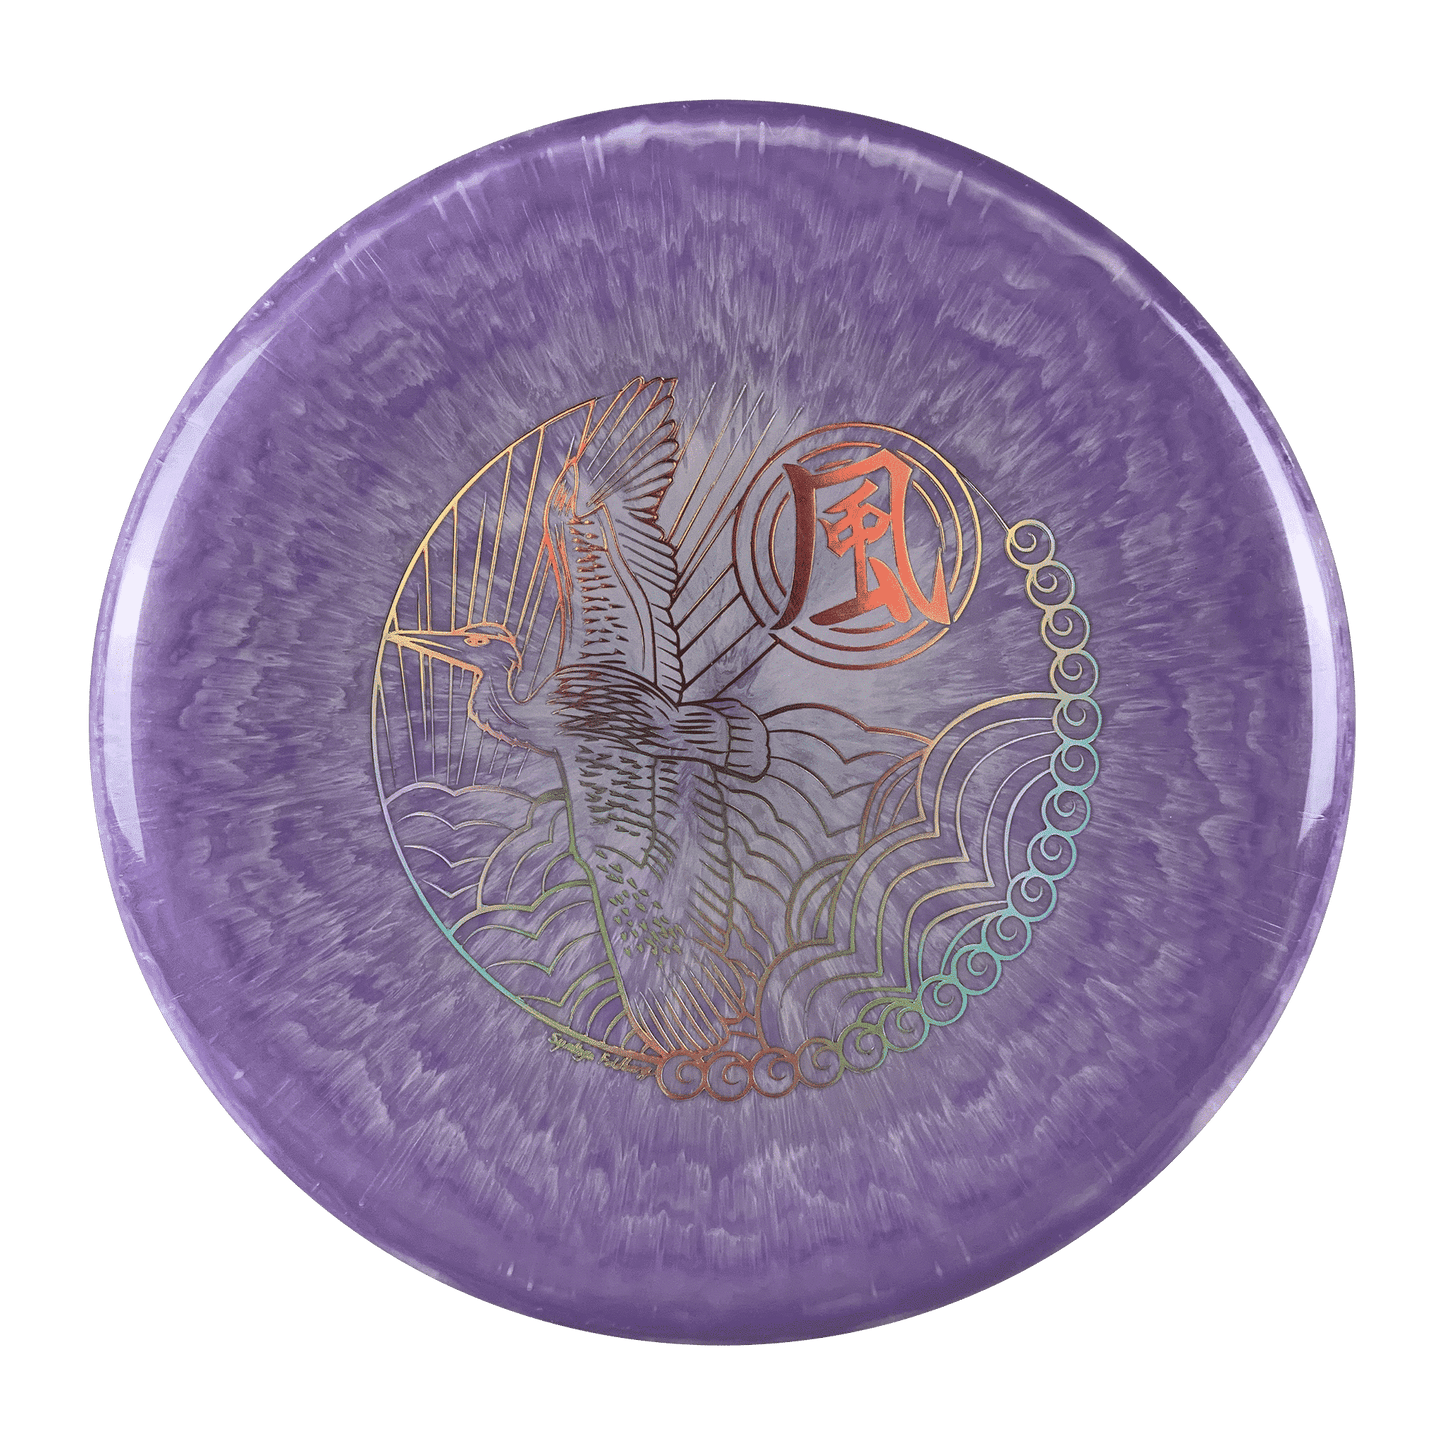 500 Spectrum PA-5 - Crane Stamp Disc Prodigy Multi / Purple 171 